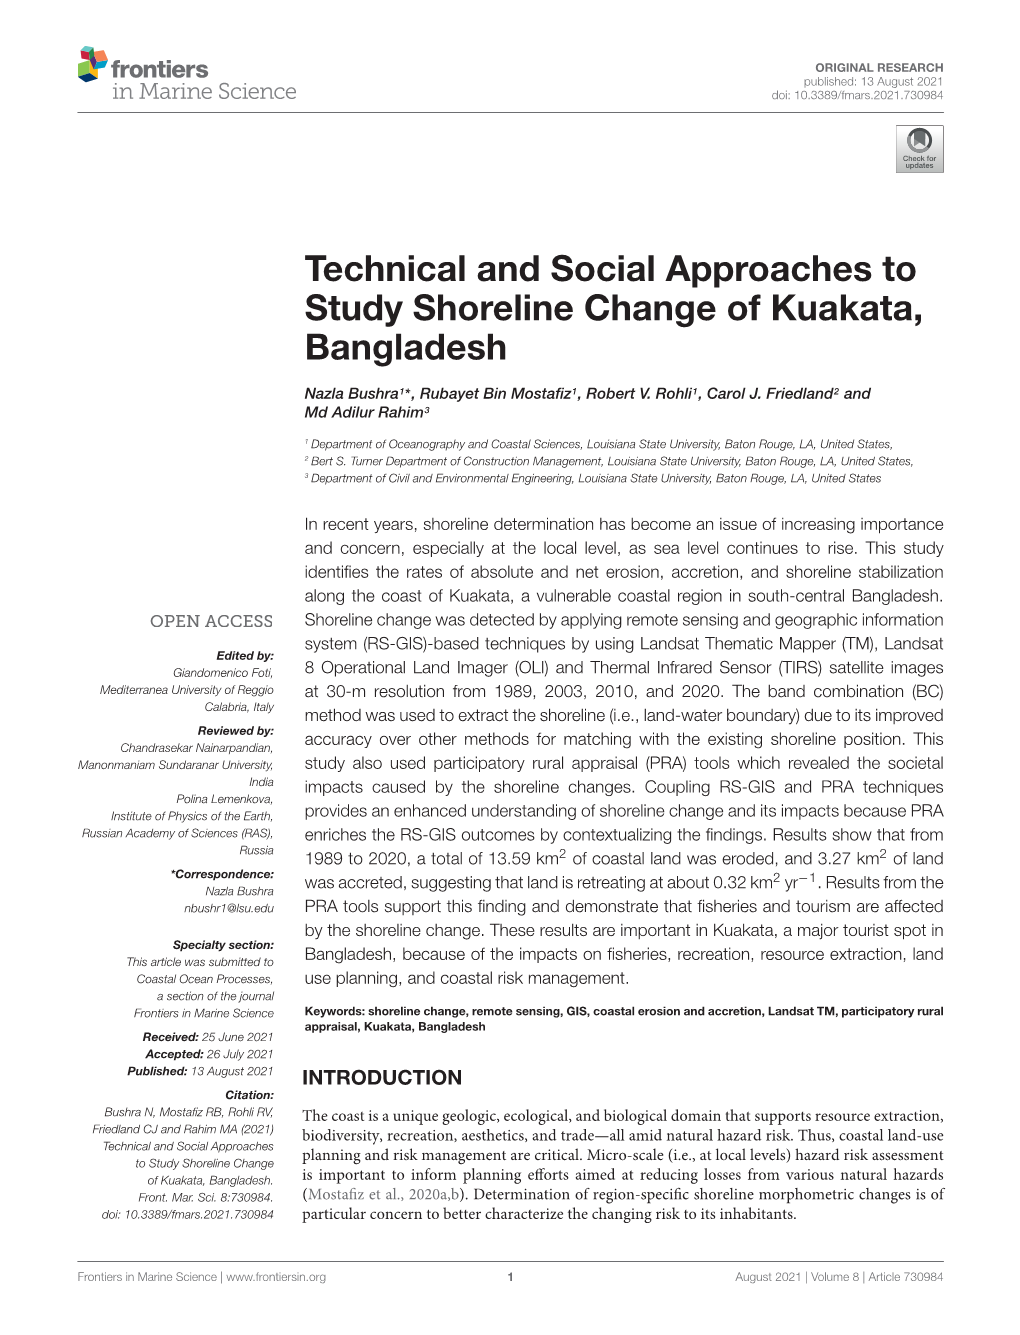 Technical and Social Approaches to Study Shoreline Change of Kuakata, Bangladesh